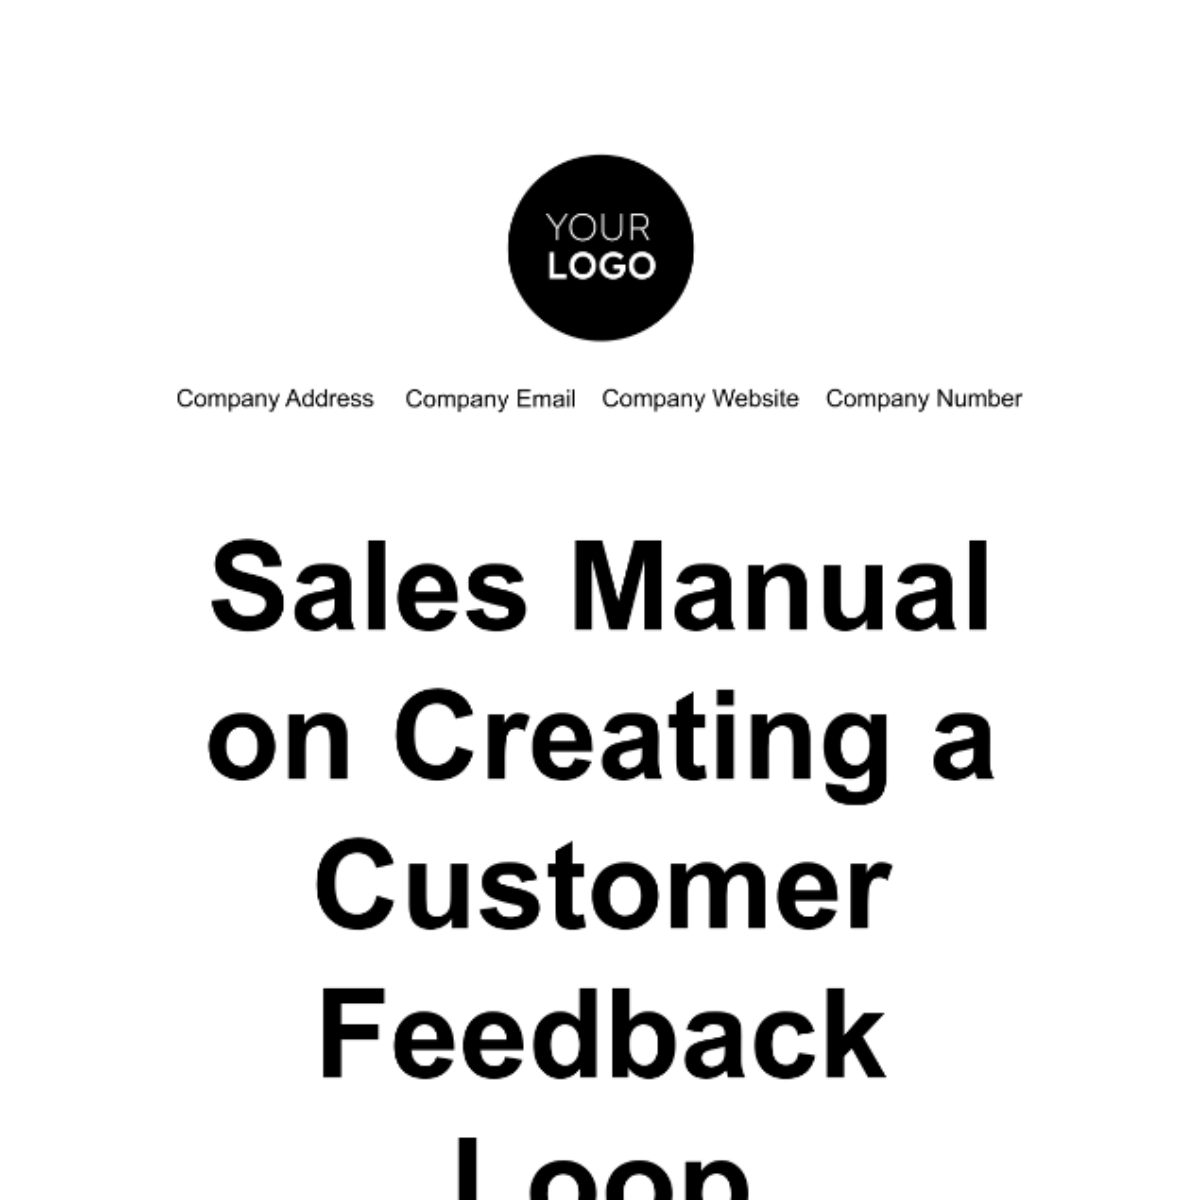 Free Sales Manual on Creating a Customer Feedback Loop Template